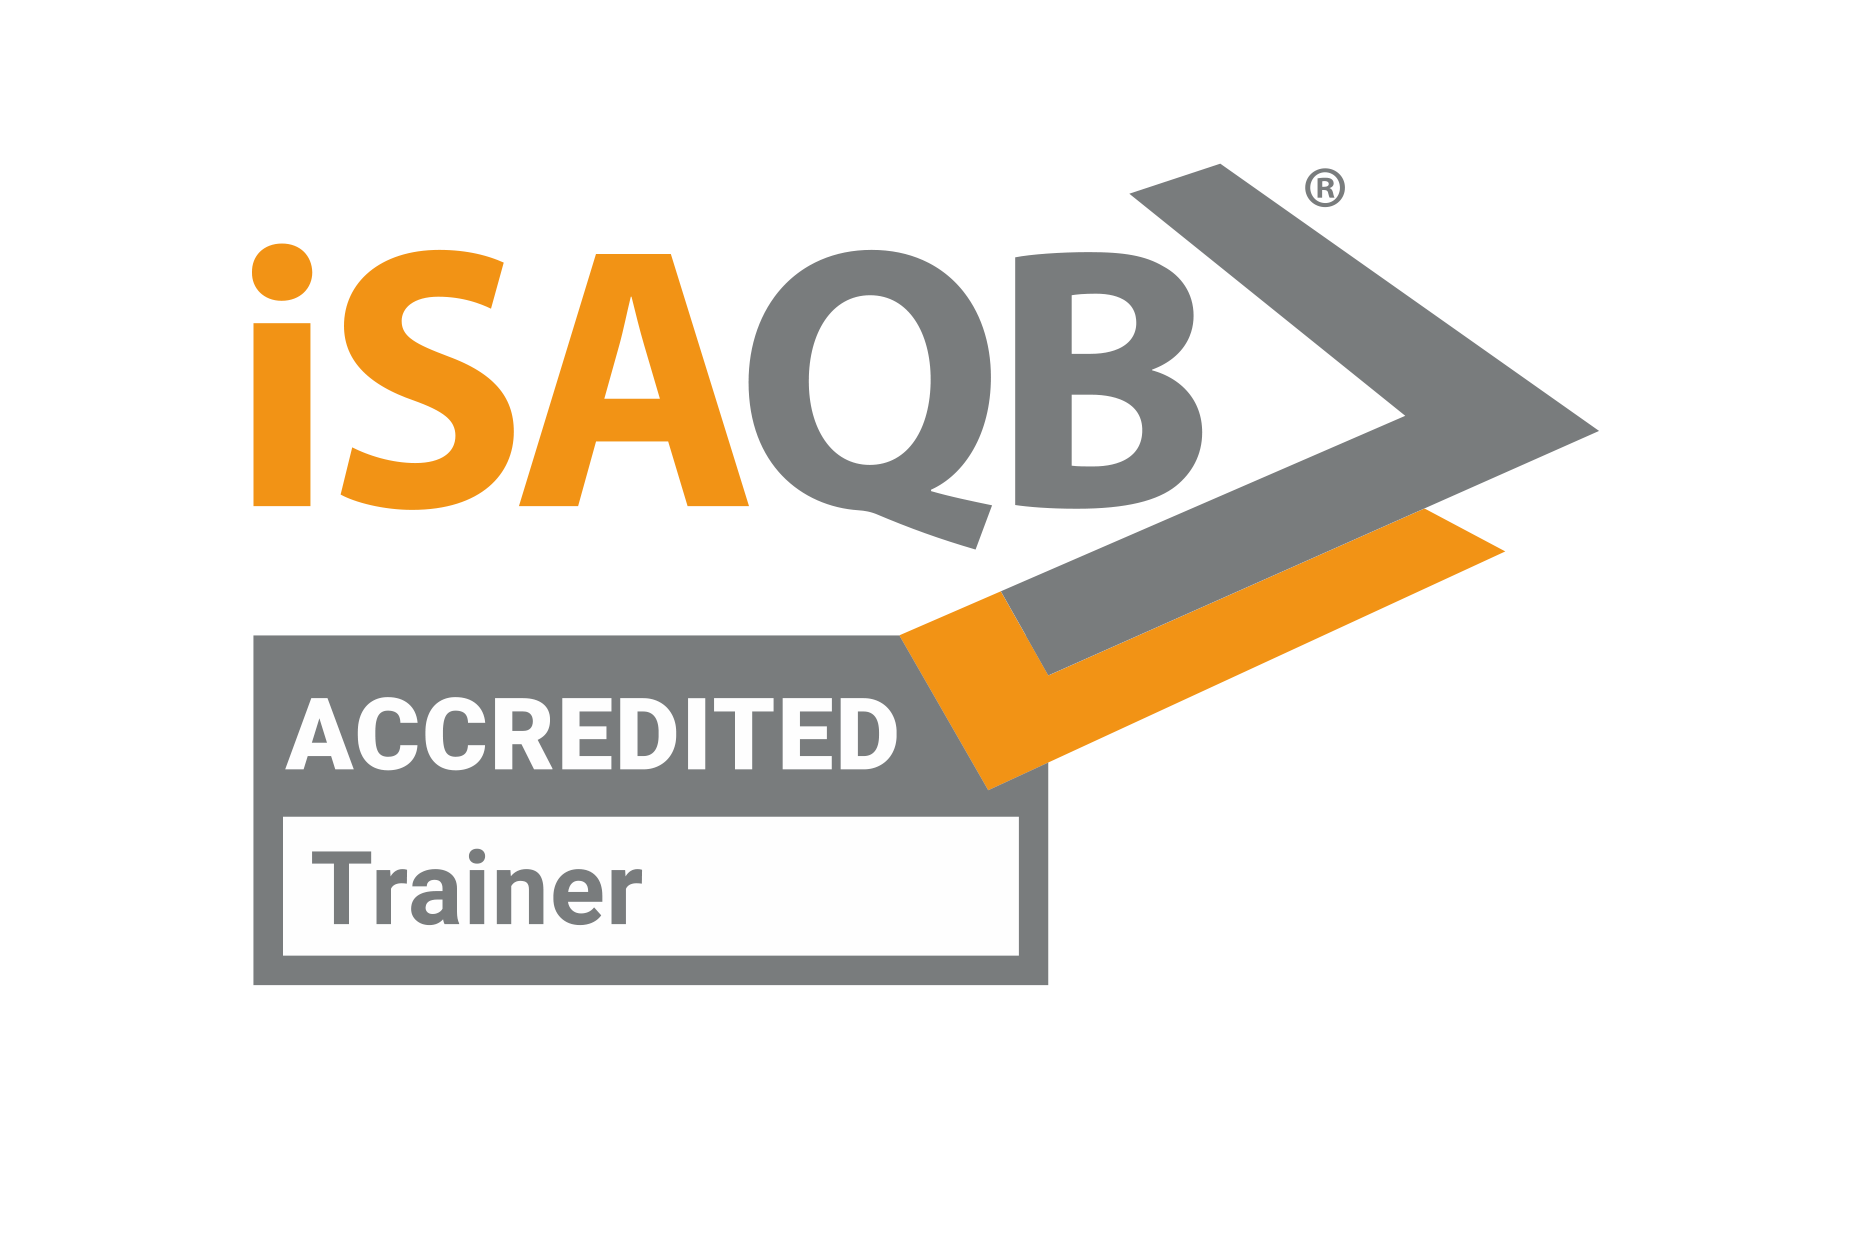 iSAQB Accredited Trainer